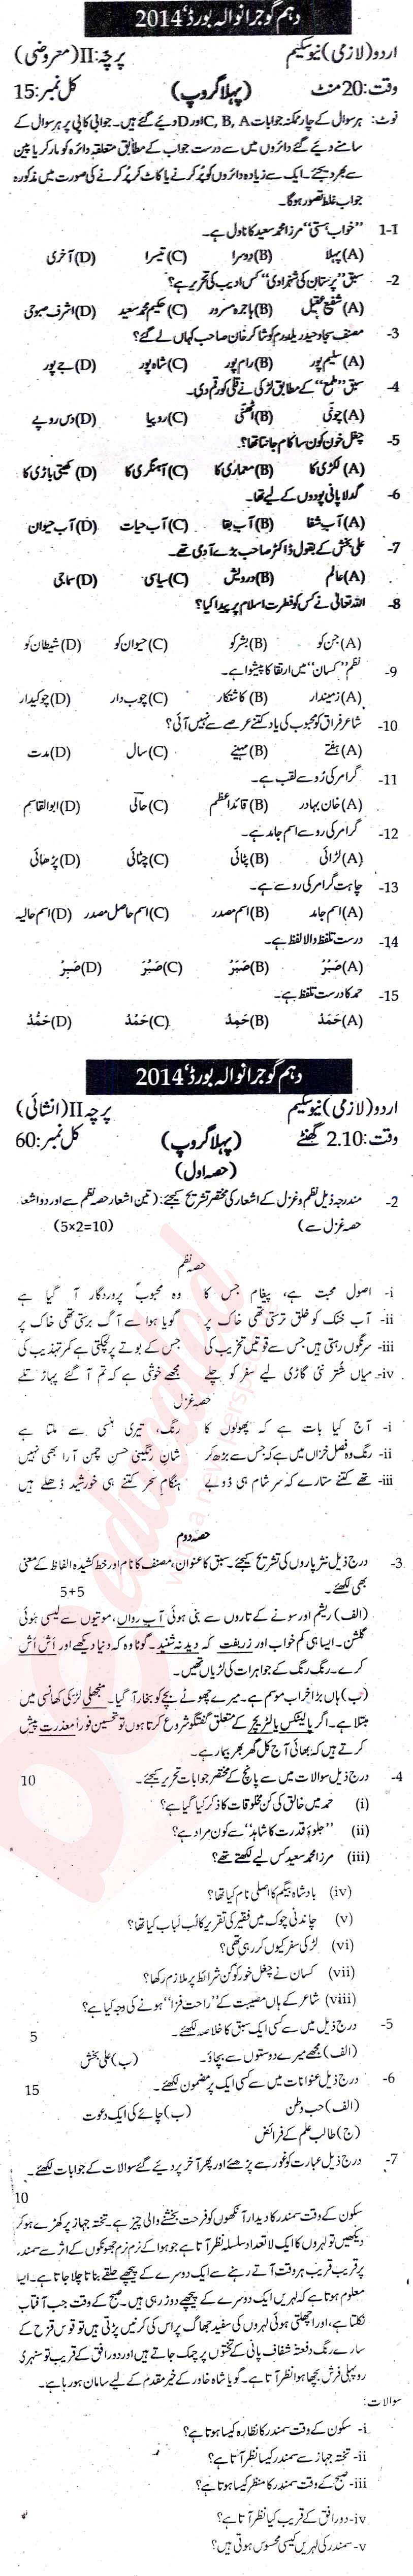 Urdu 10th class Past Paper Group 1 BISE Gujranwala 2014